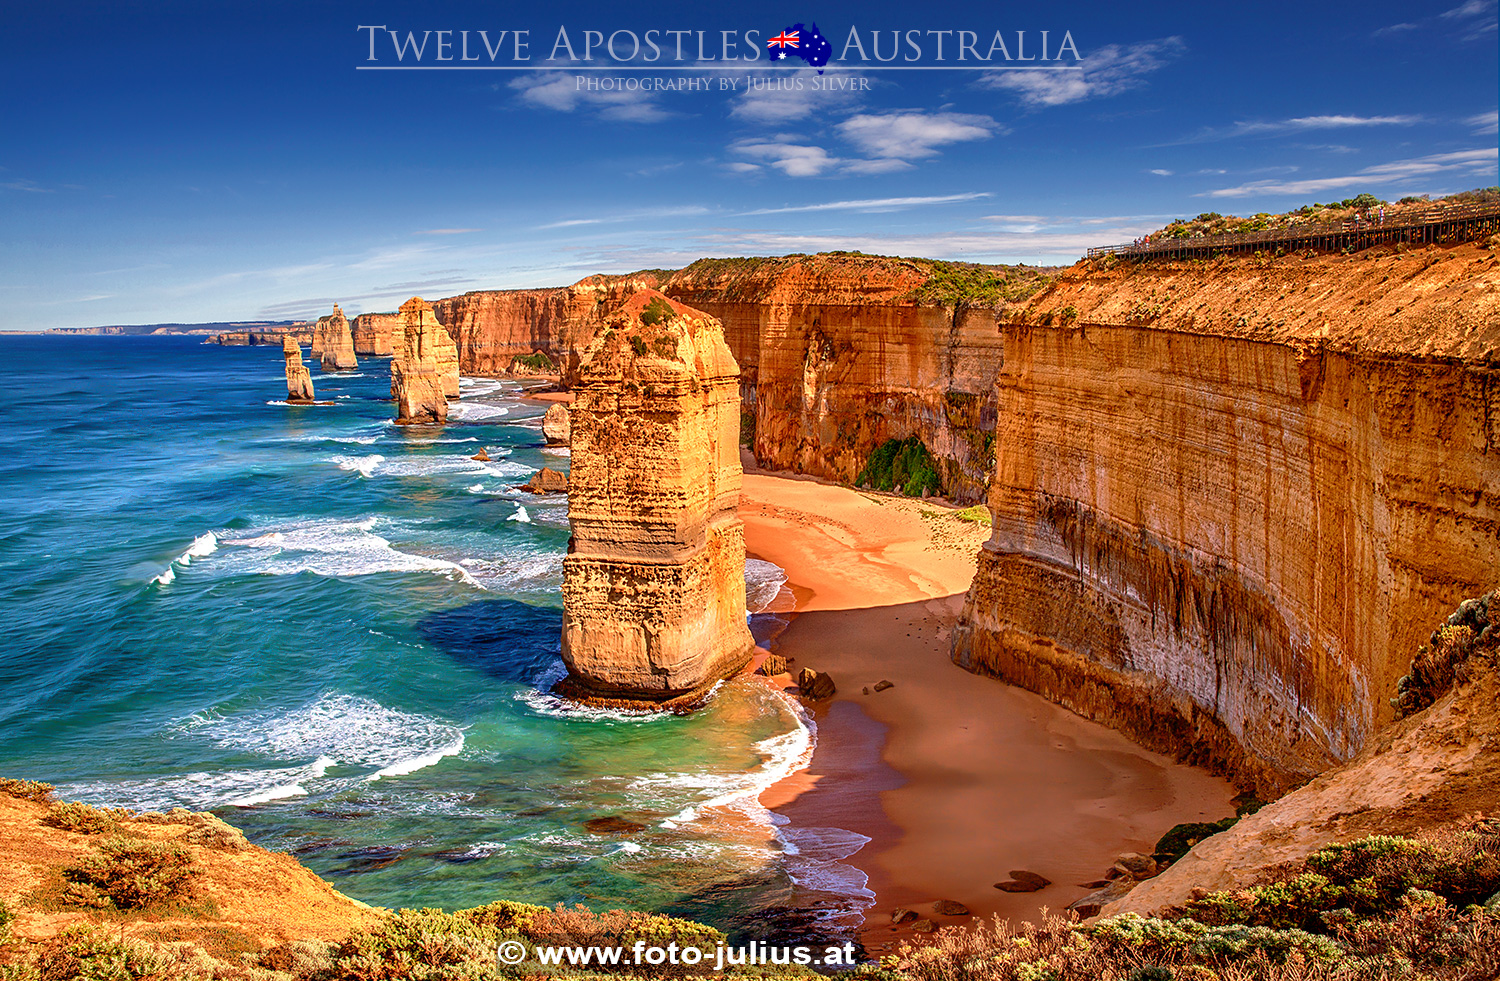 Australia_121a_Port_Campbell_Twelve_Apostles.jpg, 1,0MB